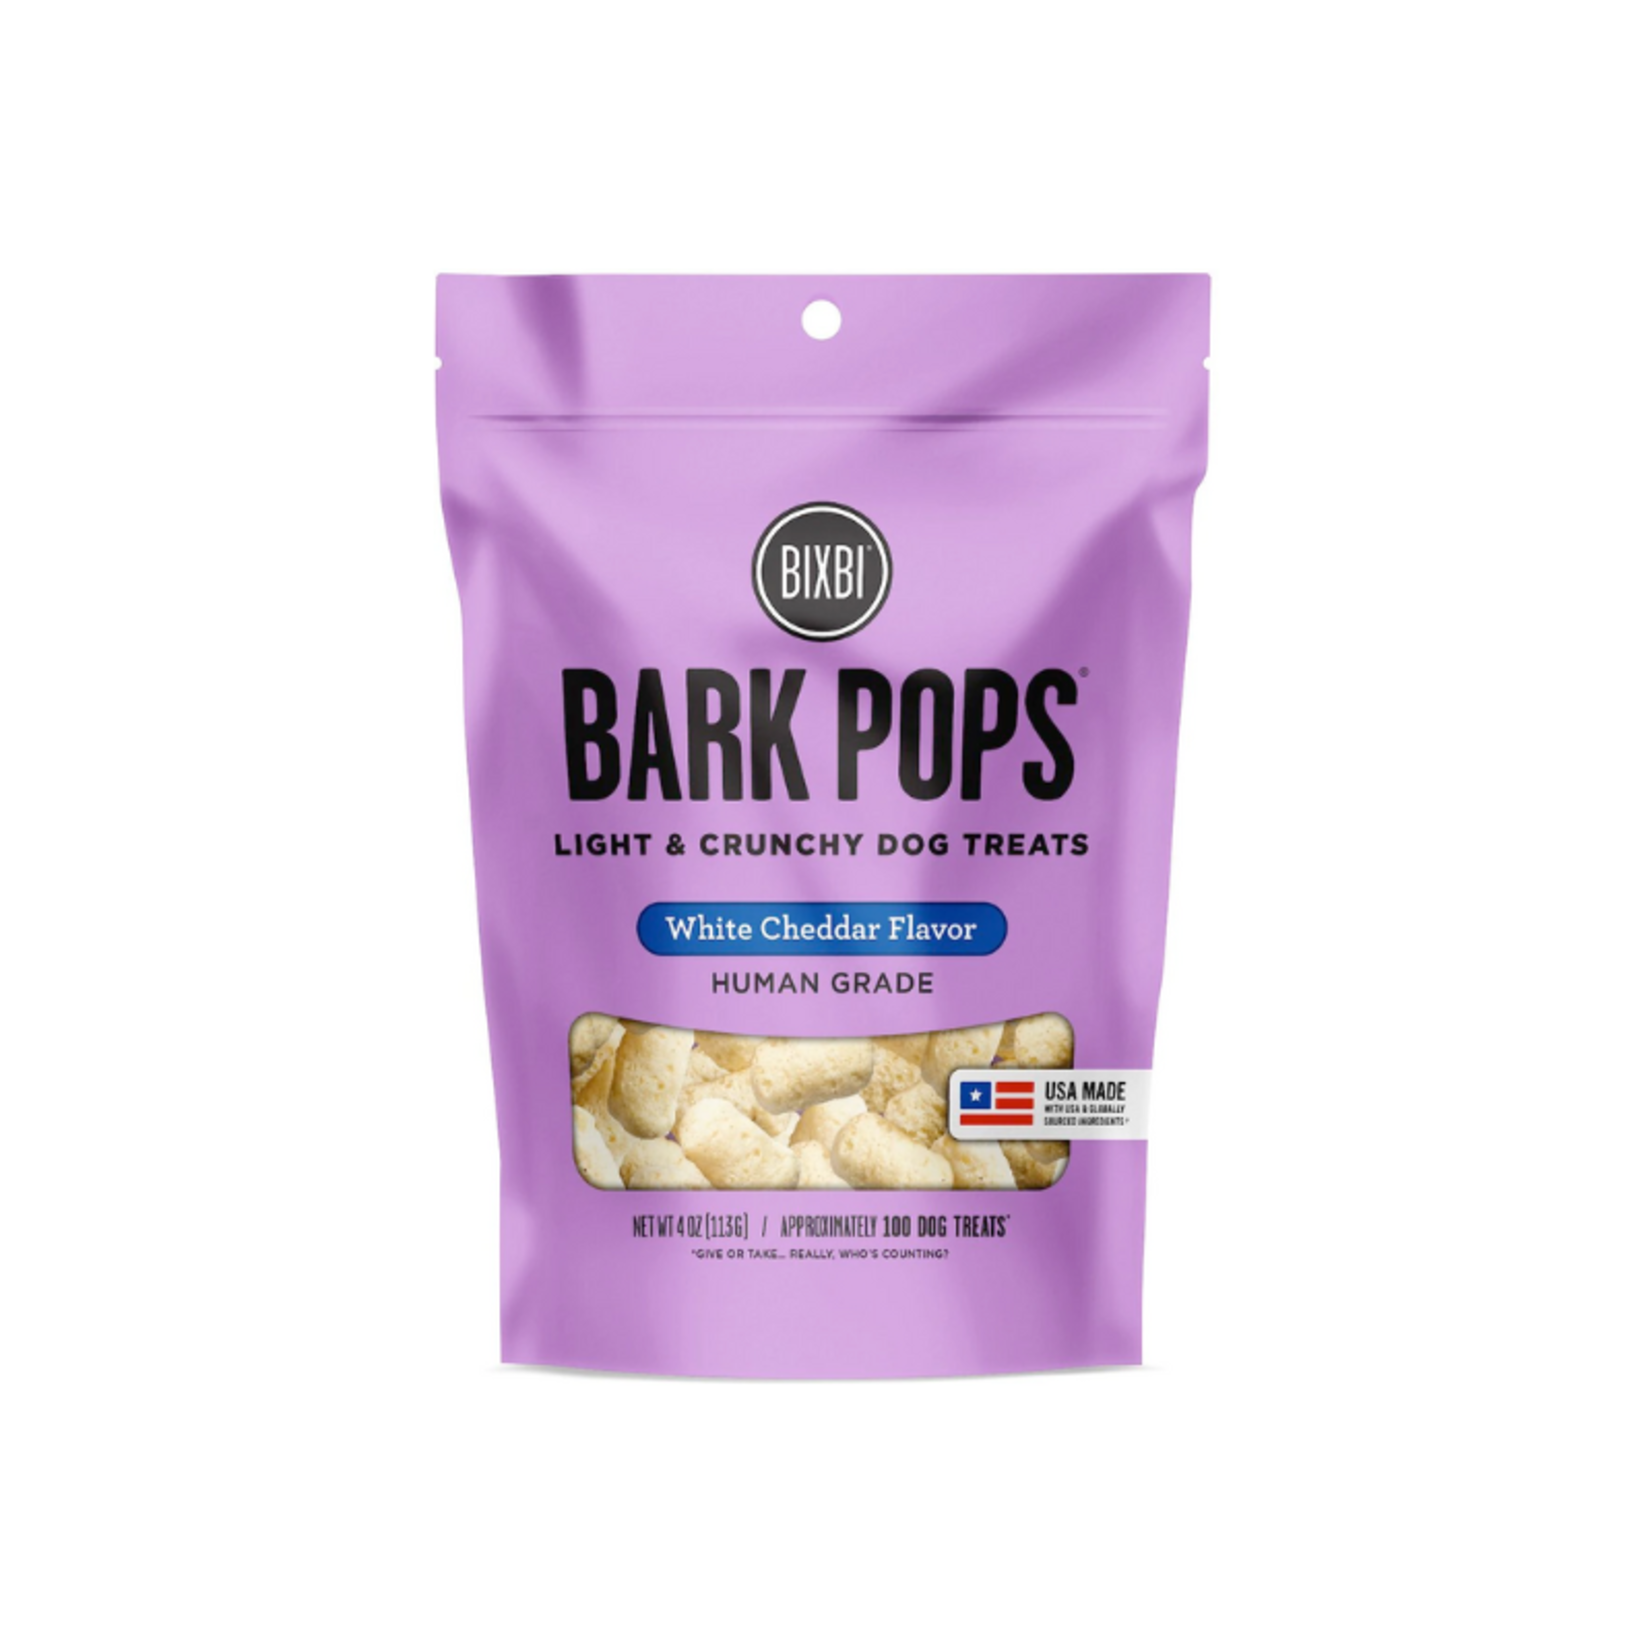 Bixbi 4 oz. - White Cheddar - Light & Crunchy Dog Treats - Bark Pops - Bixbi